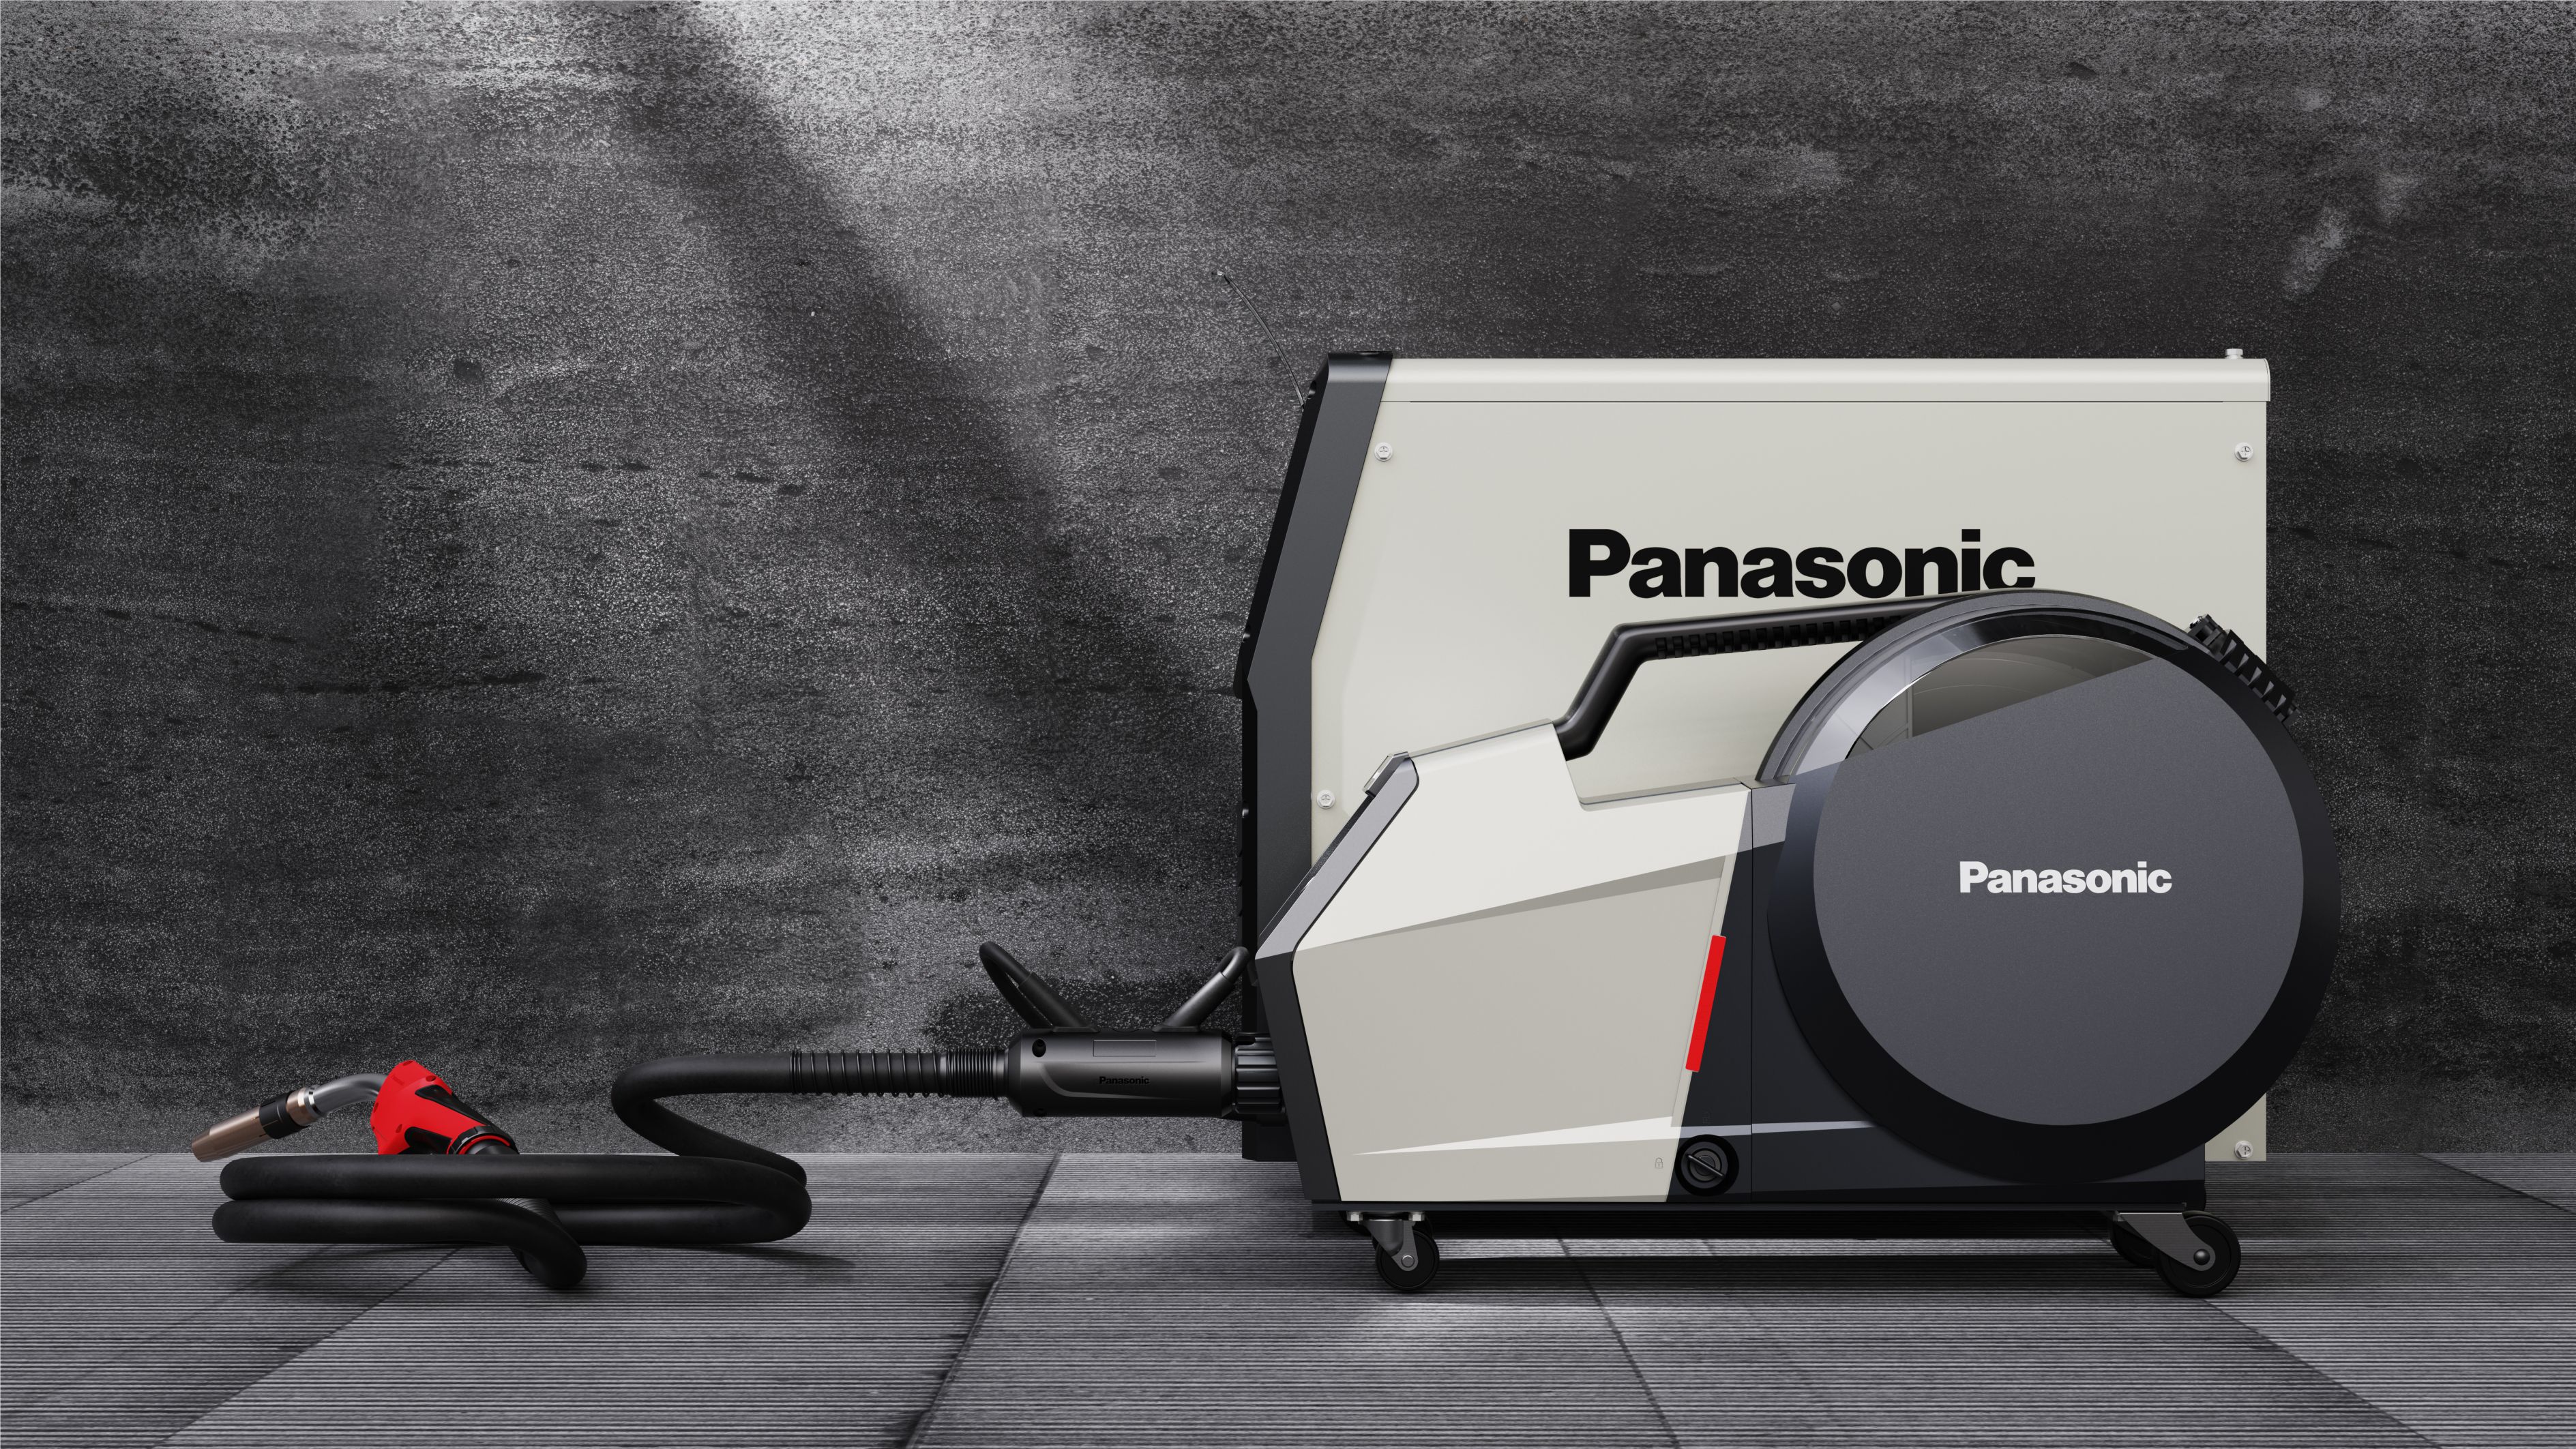 Panasonic full digital welding system